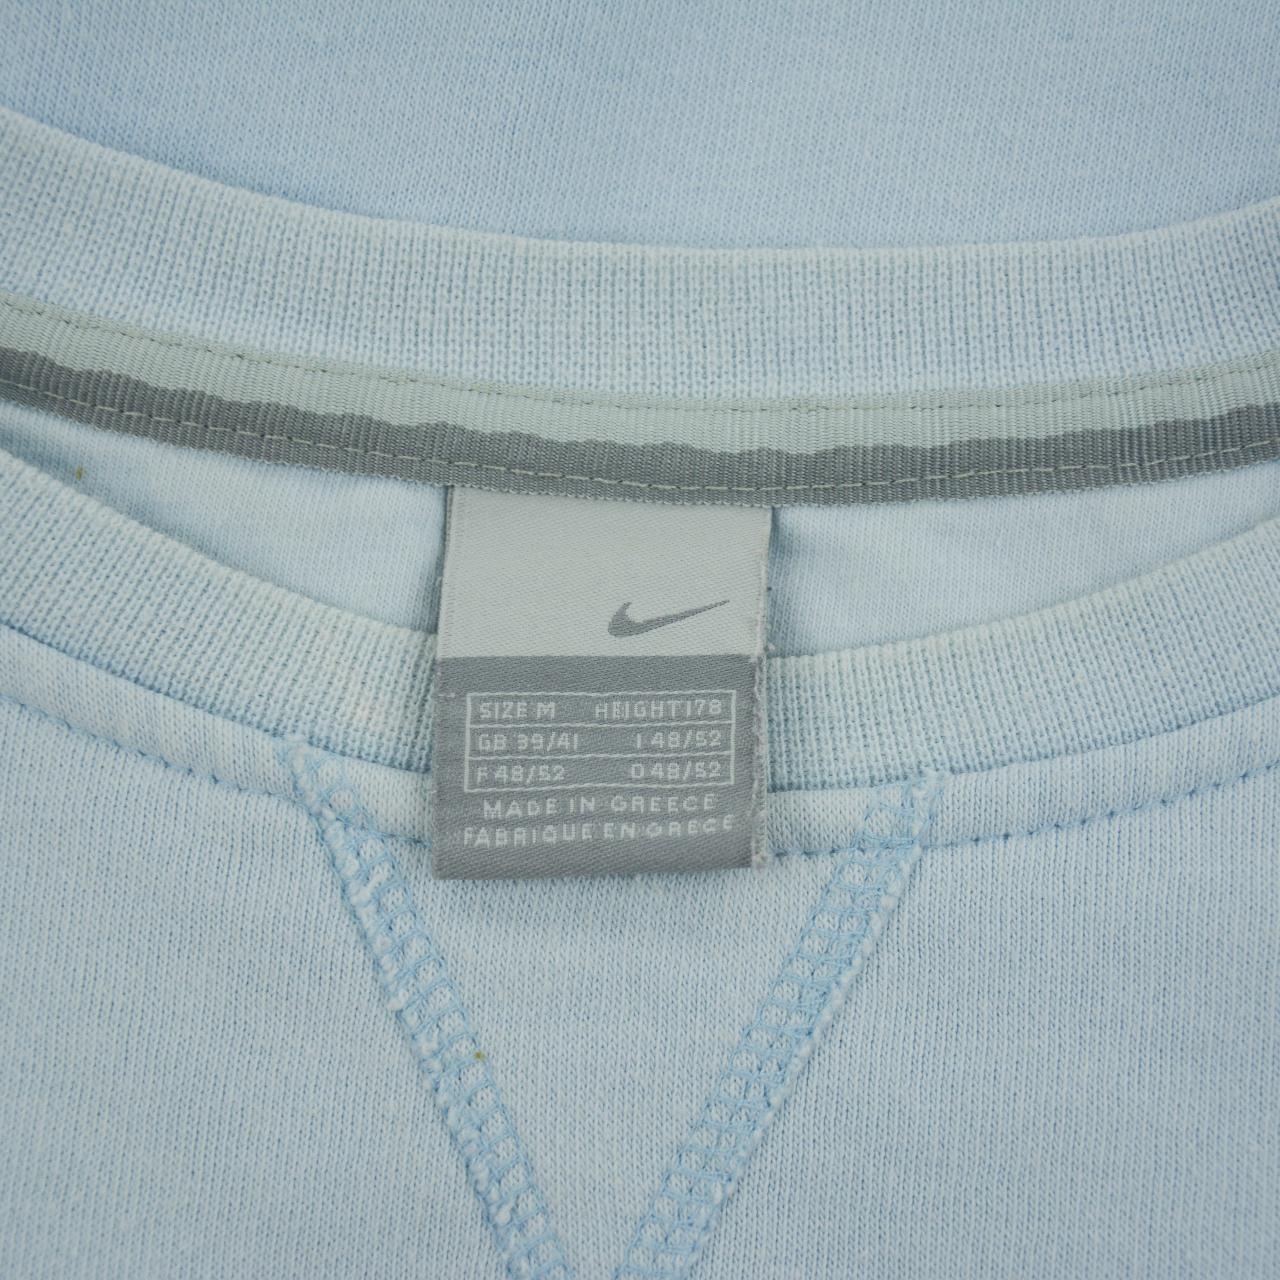 Vintage Nike Sweatshirt Size M - Known Source